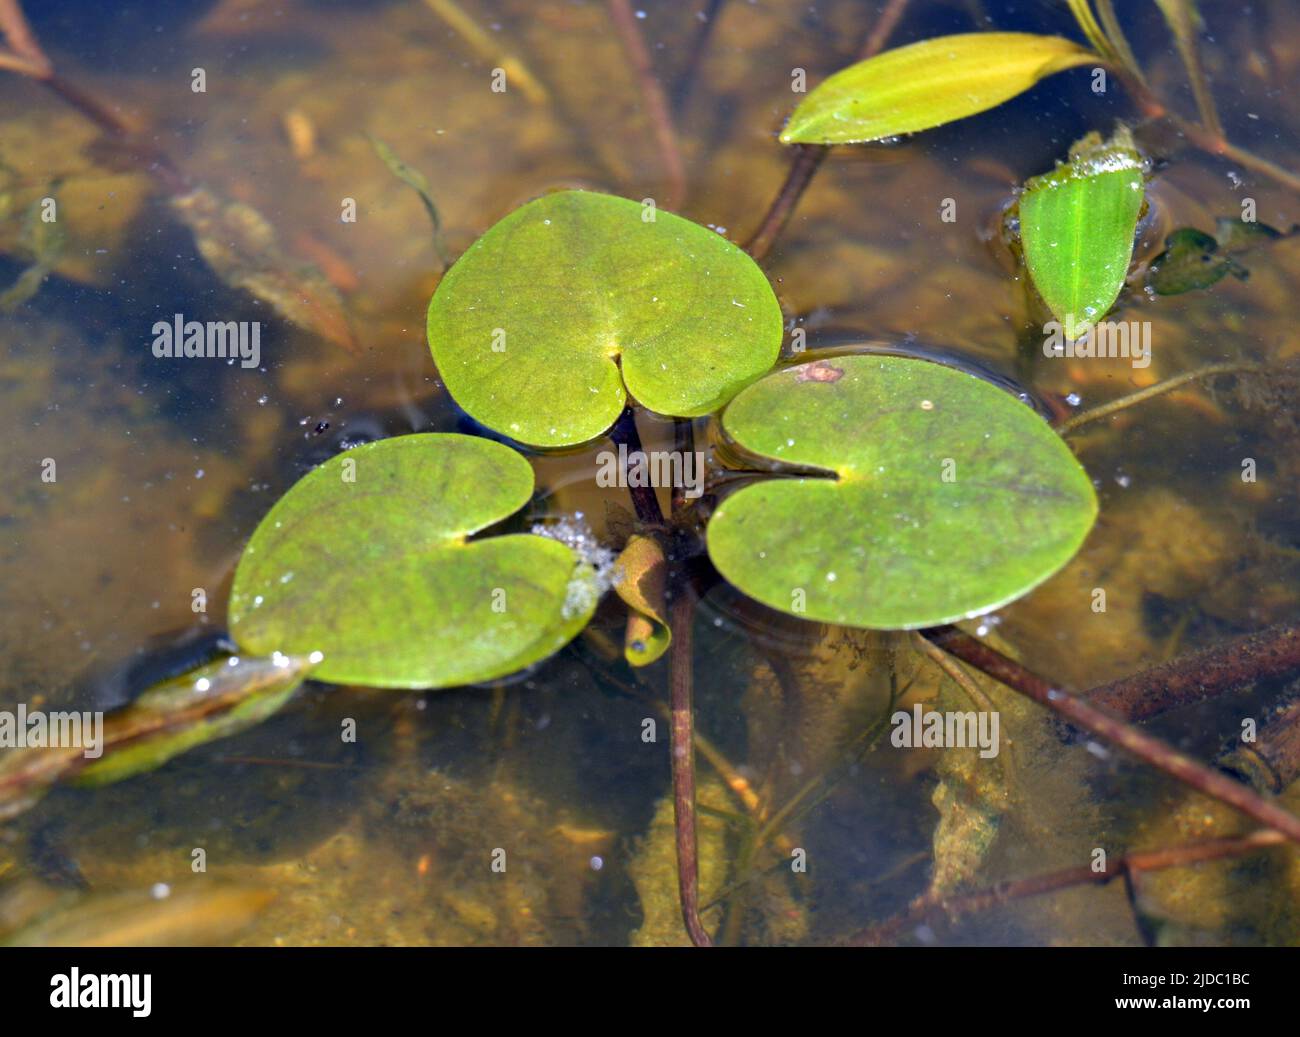 European frogbit - Latin name - Hydrocharis morsus-ranae Stock Photo